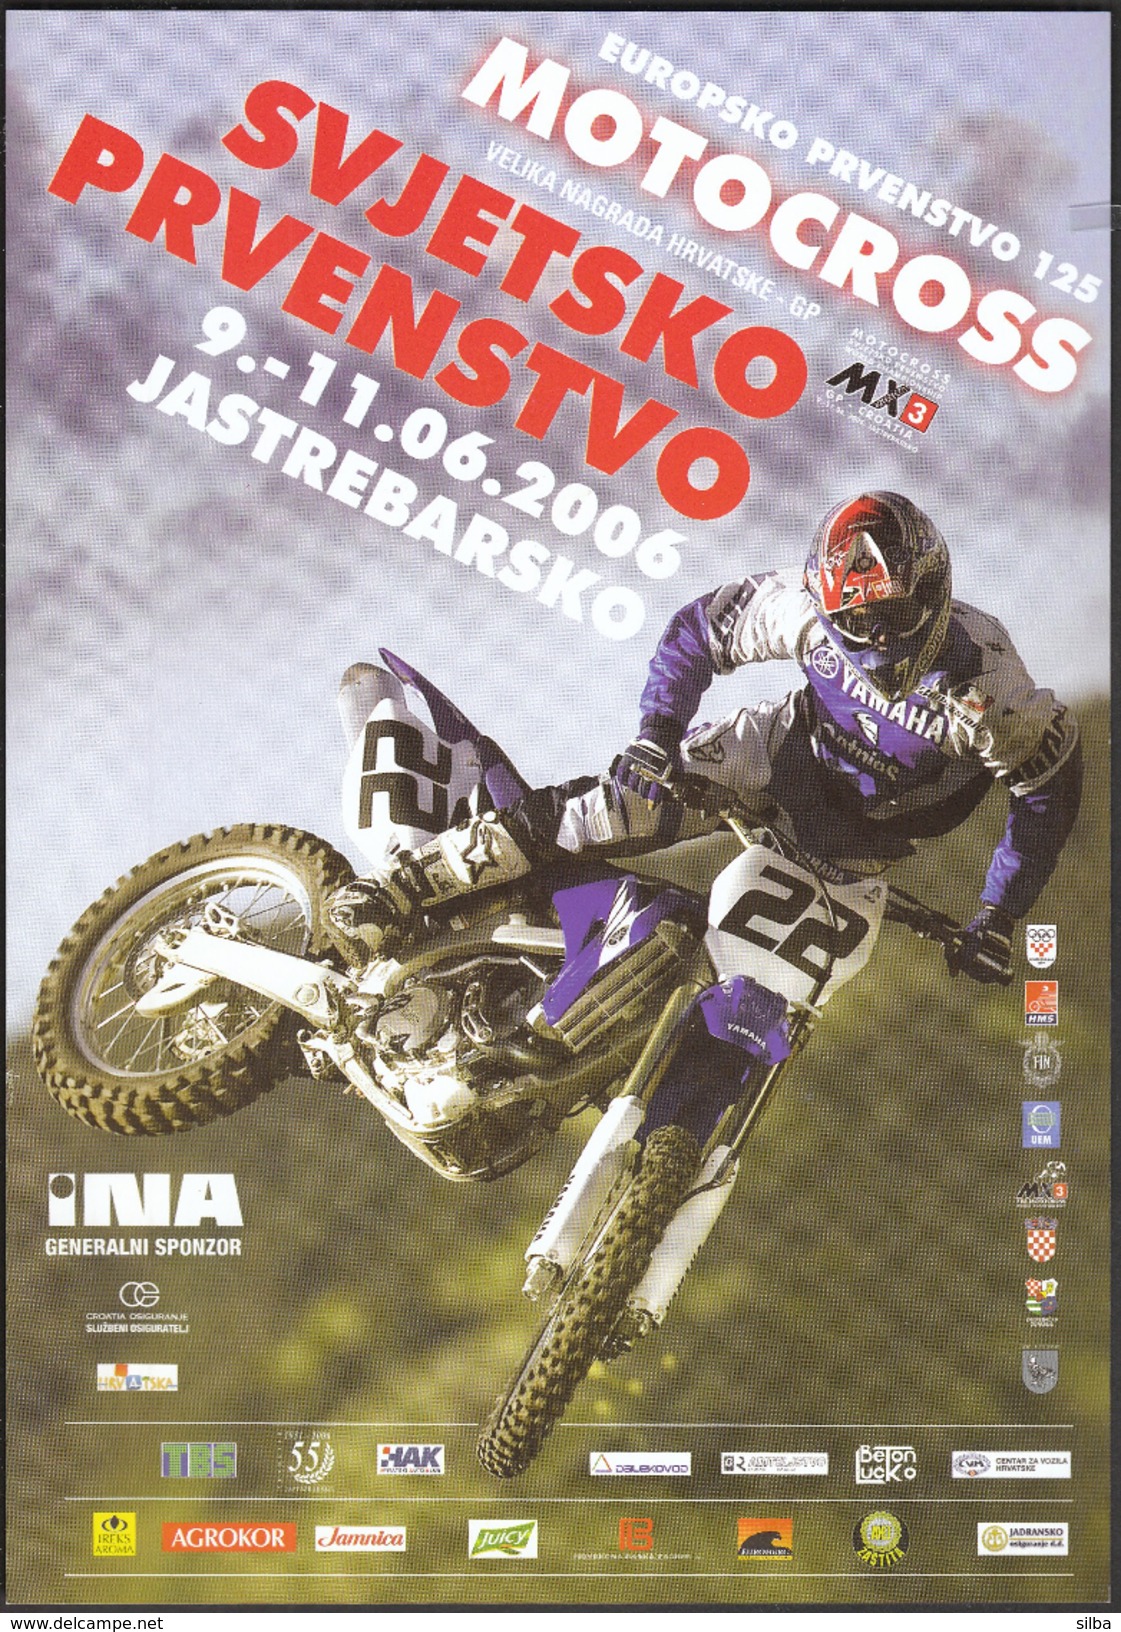 Croatia Jastrebarsko 2006 / TIMETABLE / Motocross Grand Prix Croatia / MX3 World Championship / 125 European Champ. - Europa